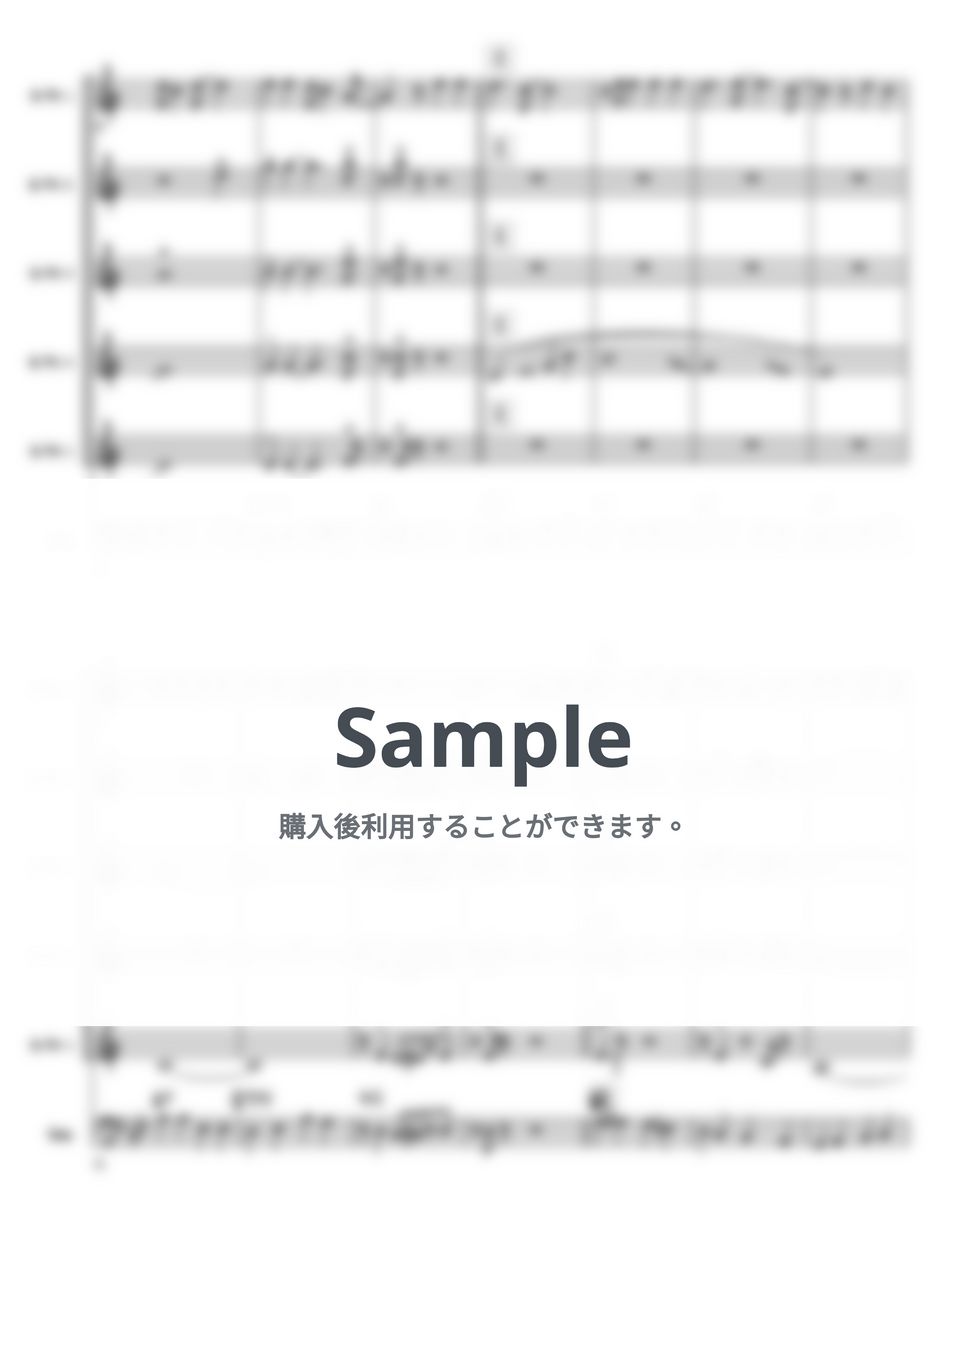 SOFFet - Beautiful Smile（高須クリニックCM曲） (トランペット5重奏+Bass) by 高田将利